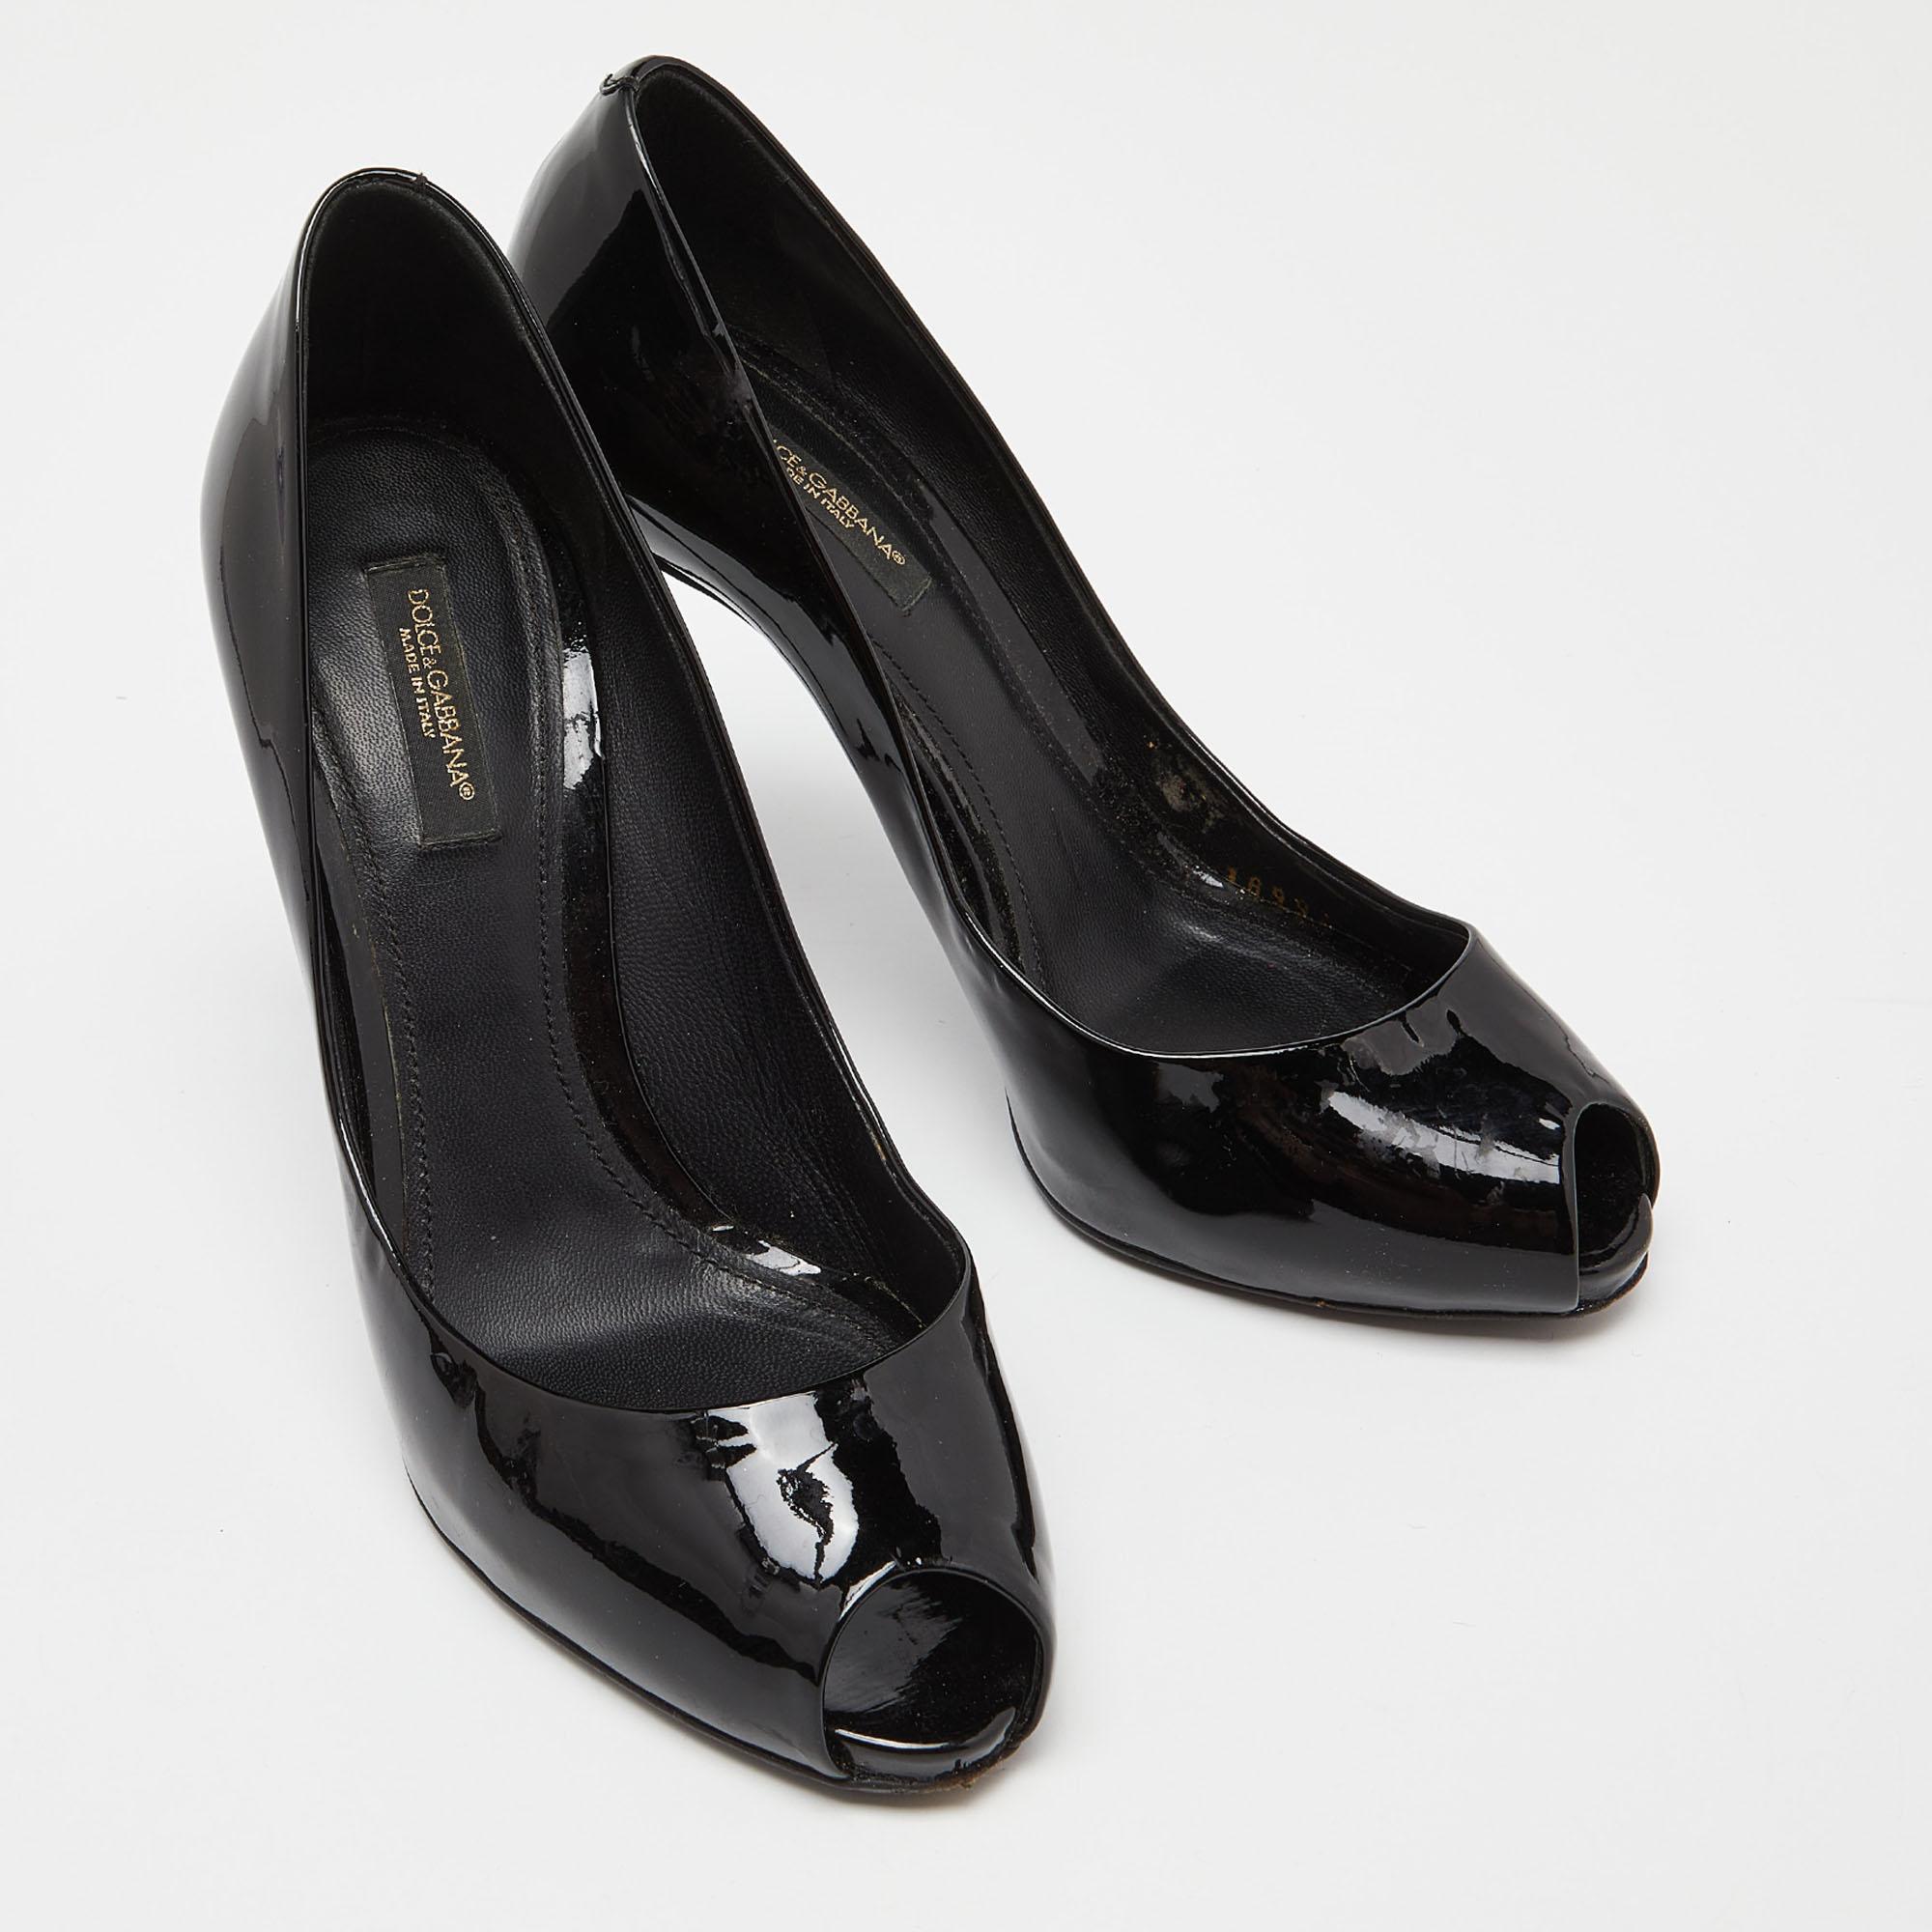 Dolce & Gabbana Black Patent Leather Platform Peep Toe Pumps Size 37 In Good Condition For Sale In Dubai, Al Qouz 2